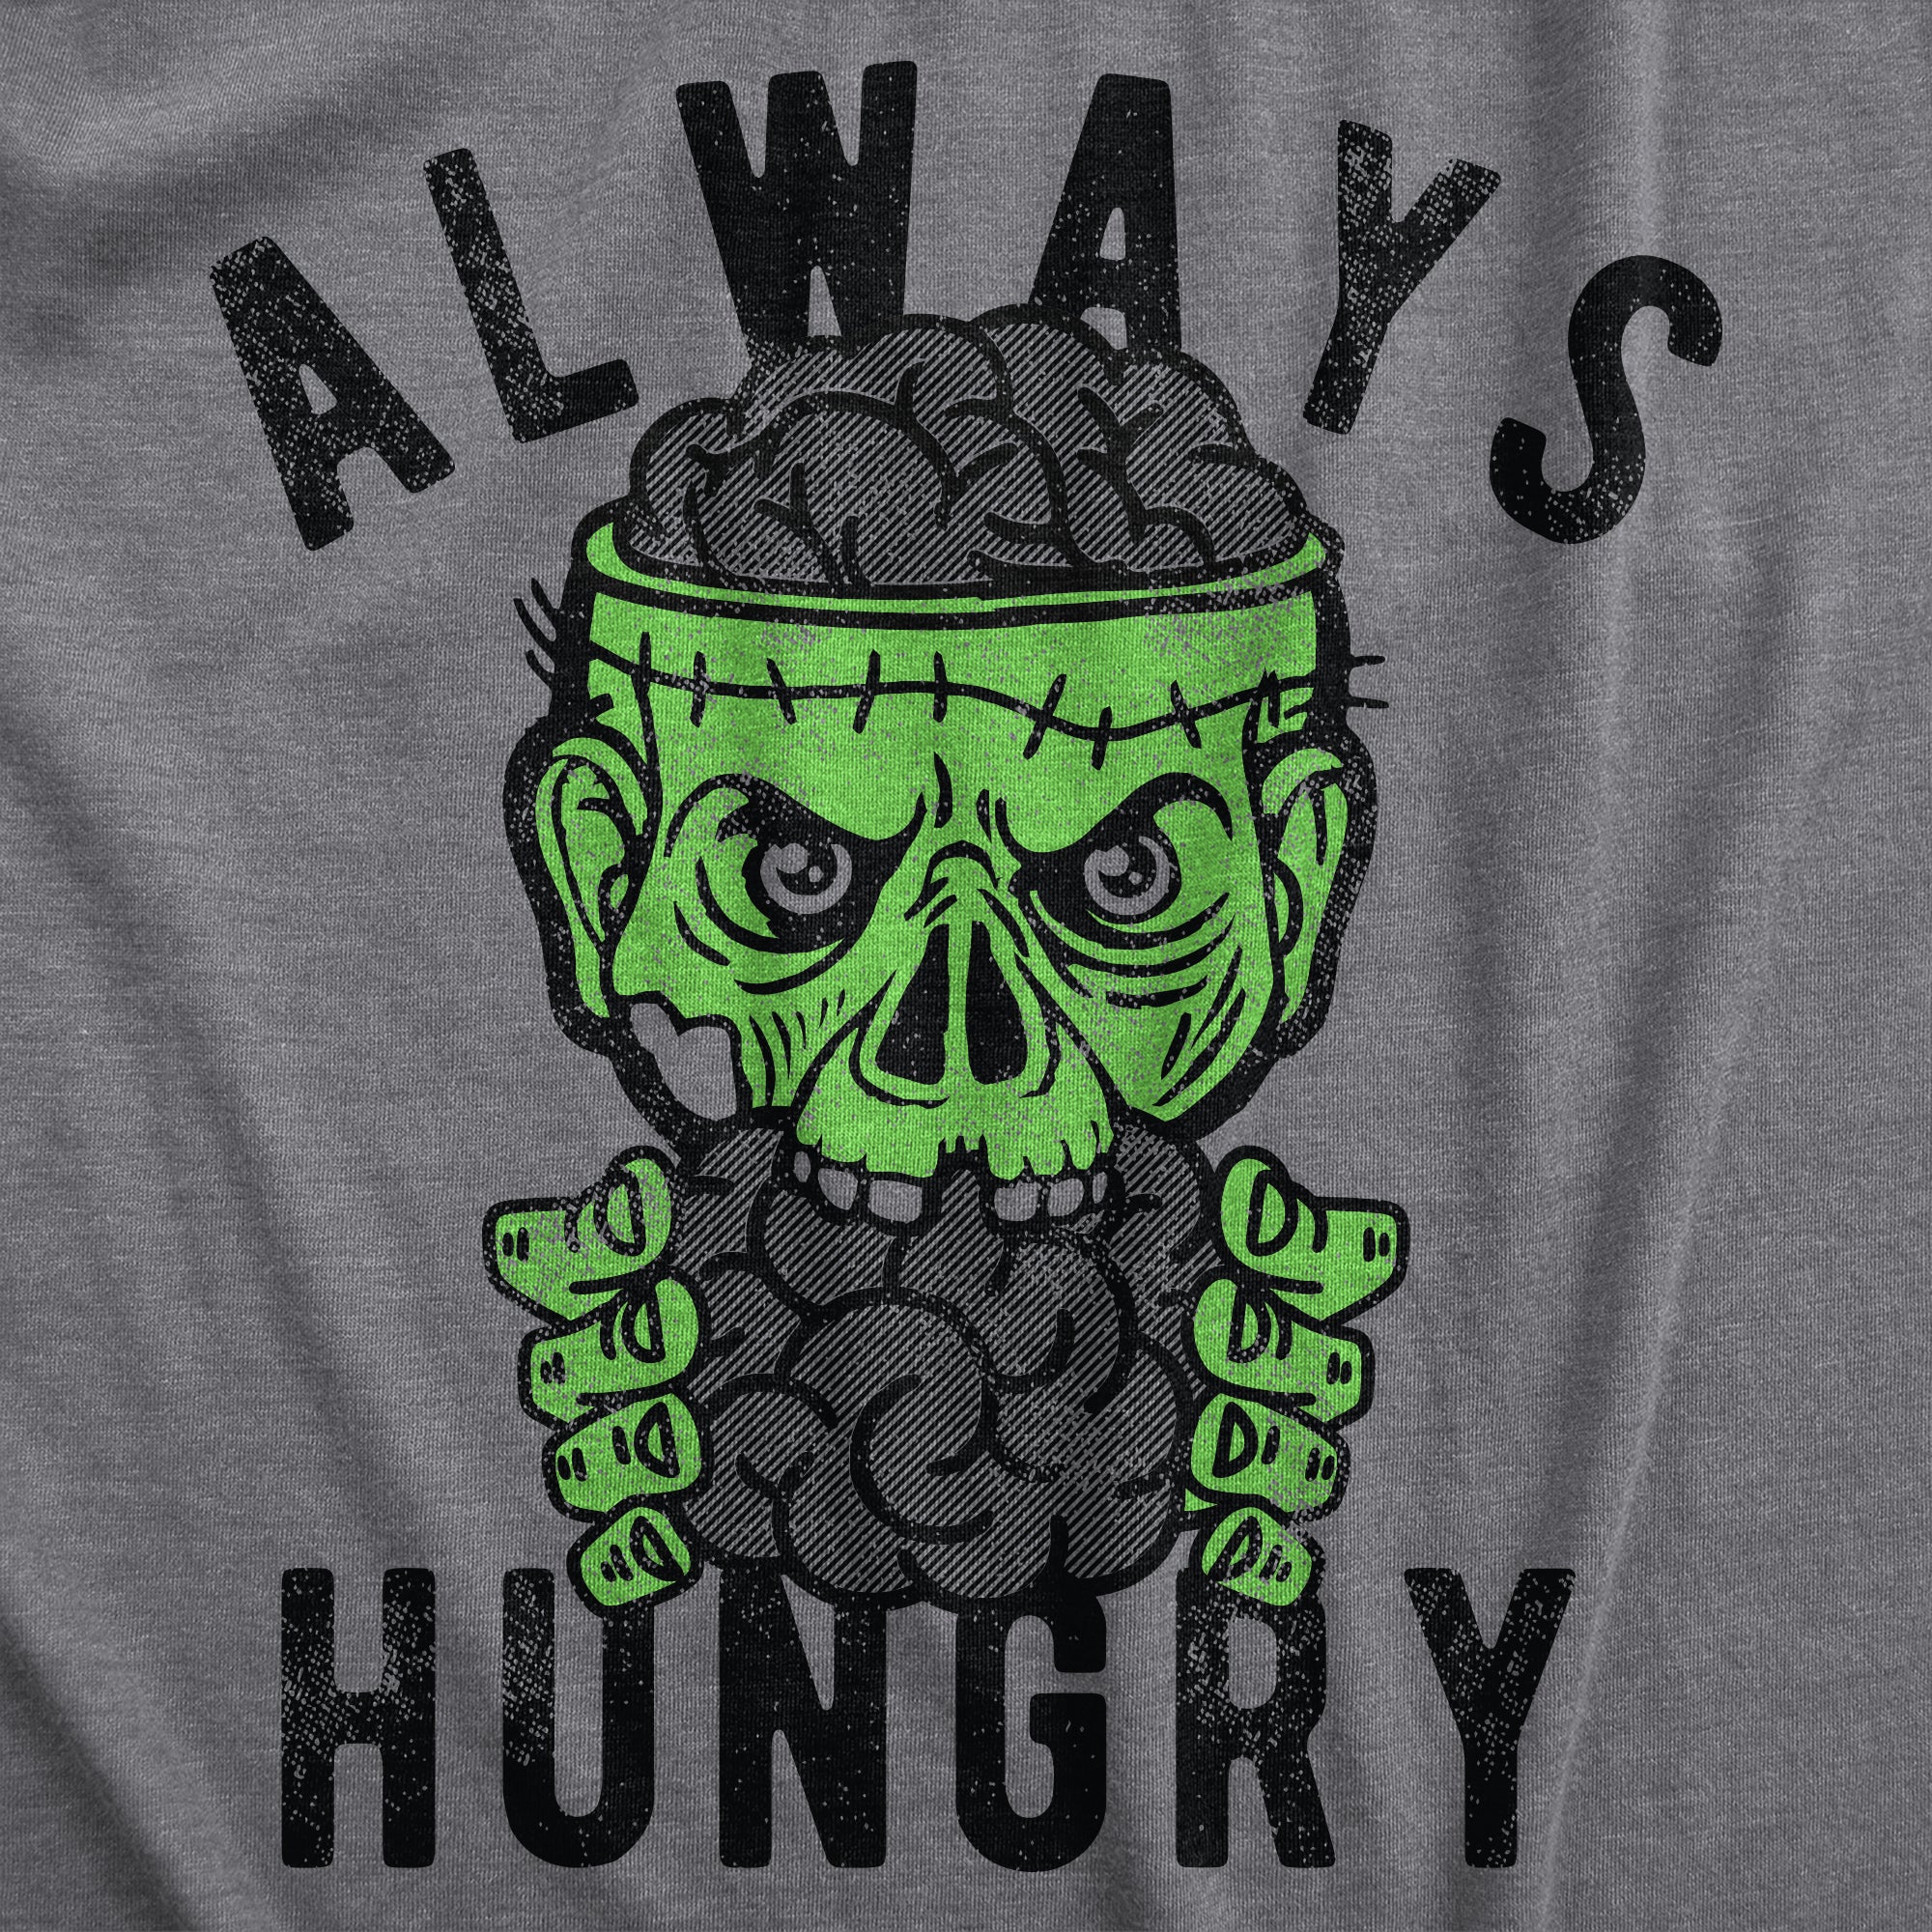 Funny Dark Heather Grey - HUNGRY Always Hungry Womens T Shirt Nerdy halloween Zombie Tee